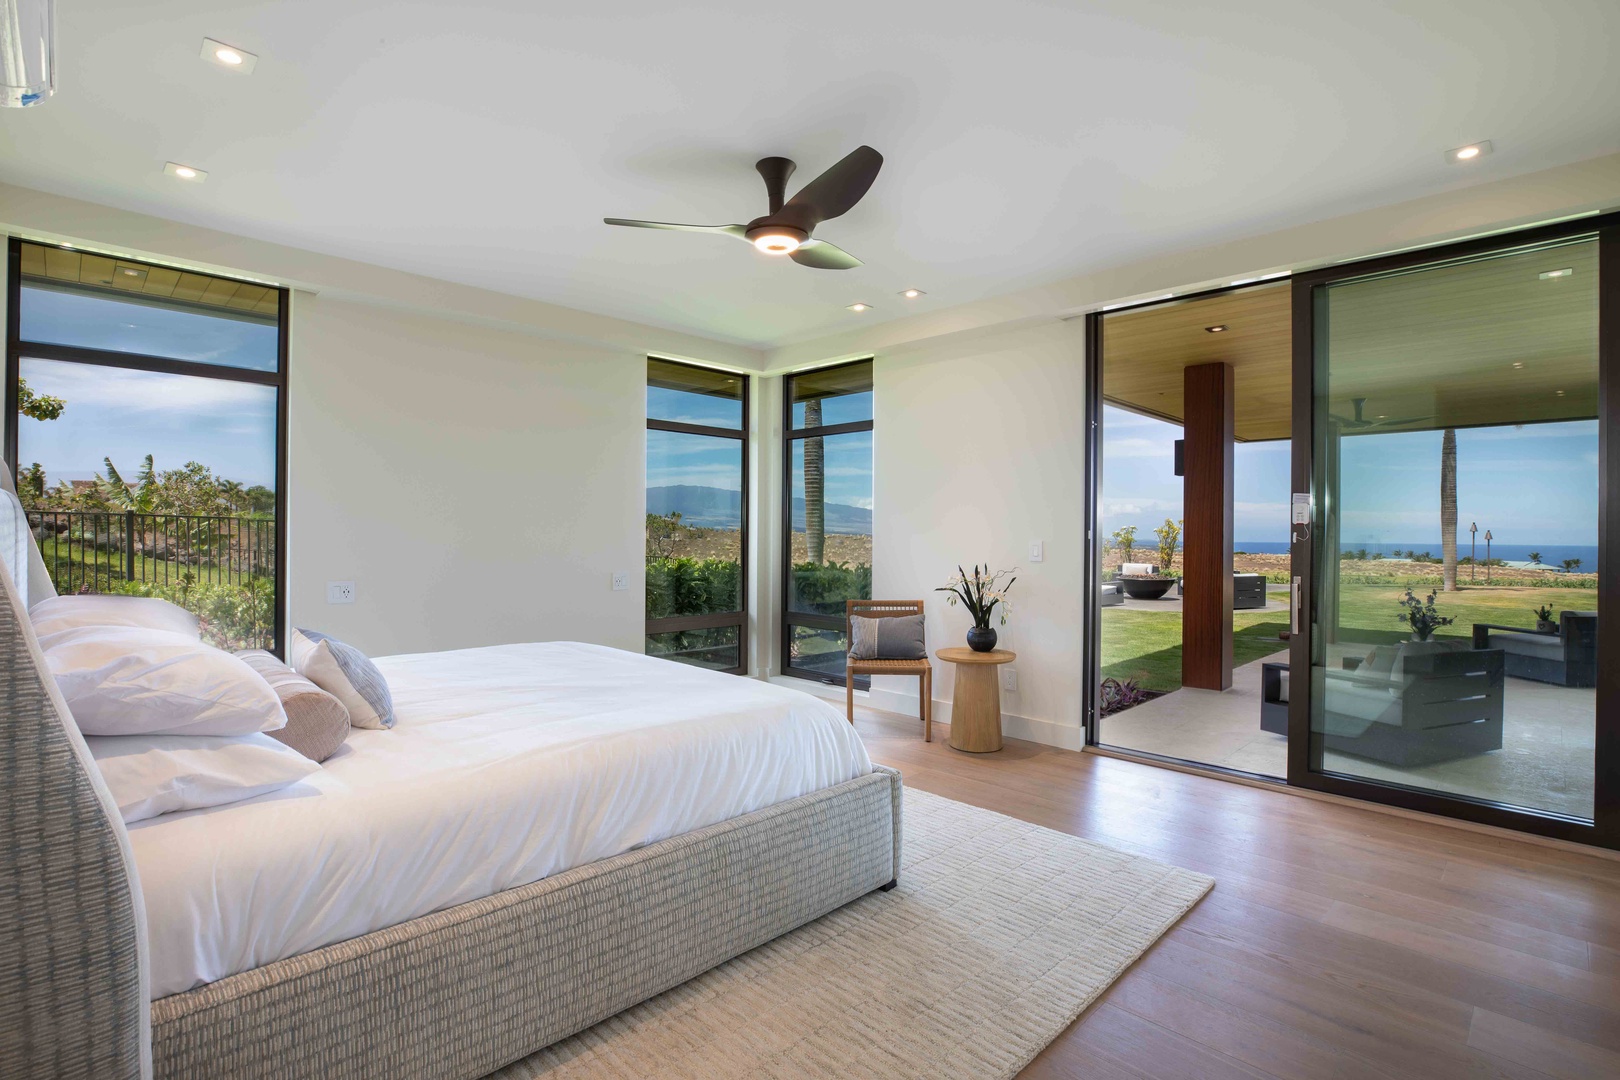 Kamuela Vacation Rentals, Hapuna Estates #8 - Master Suite 2 off the main lanai with ocean views